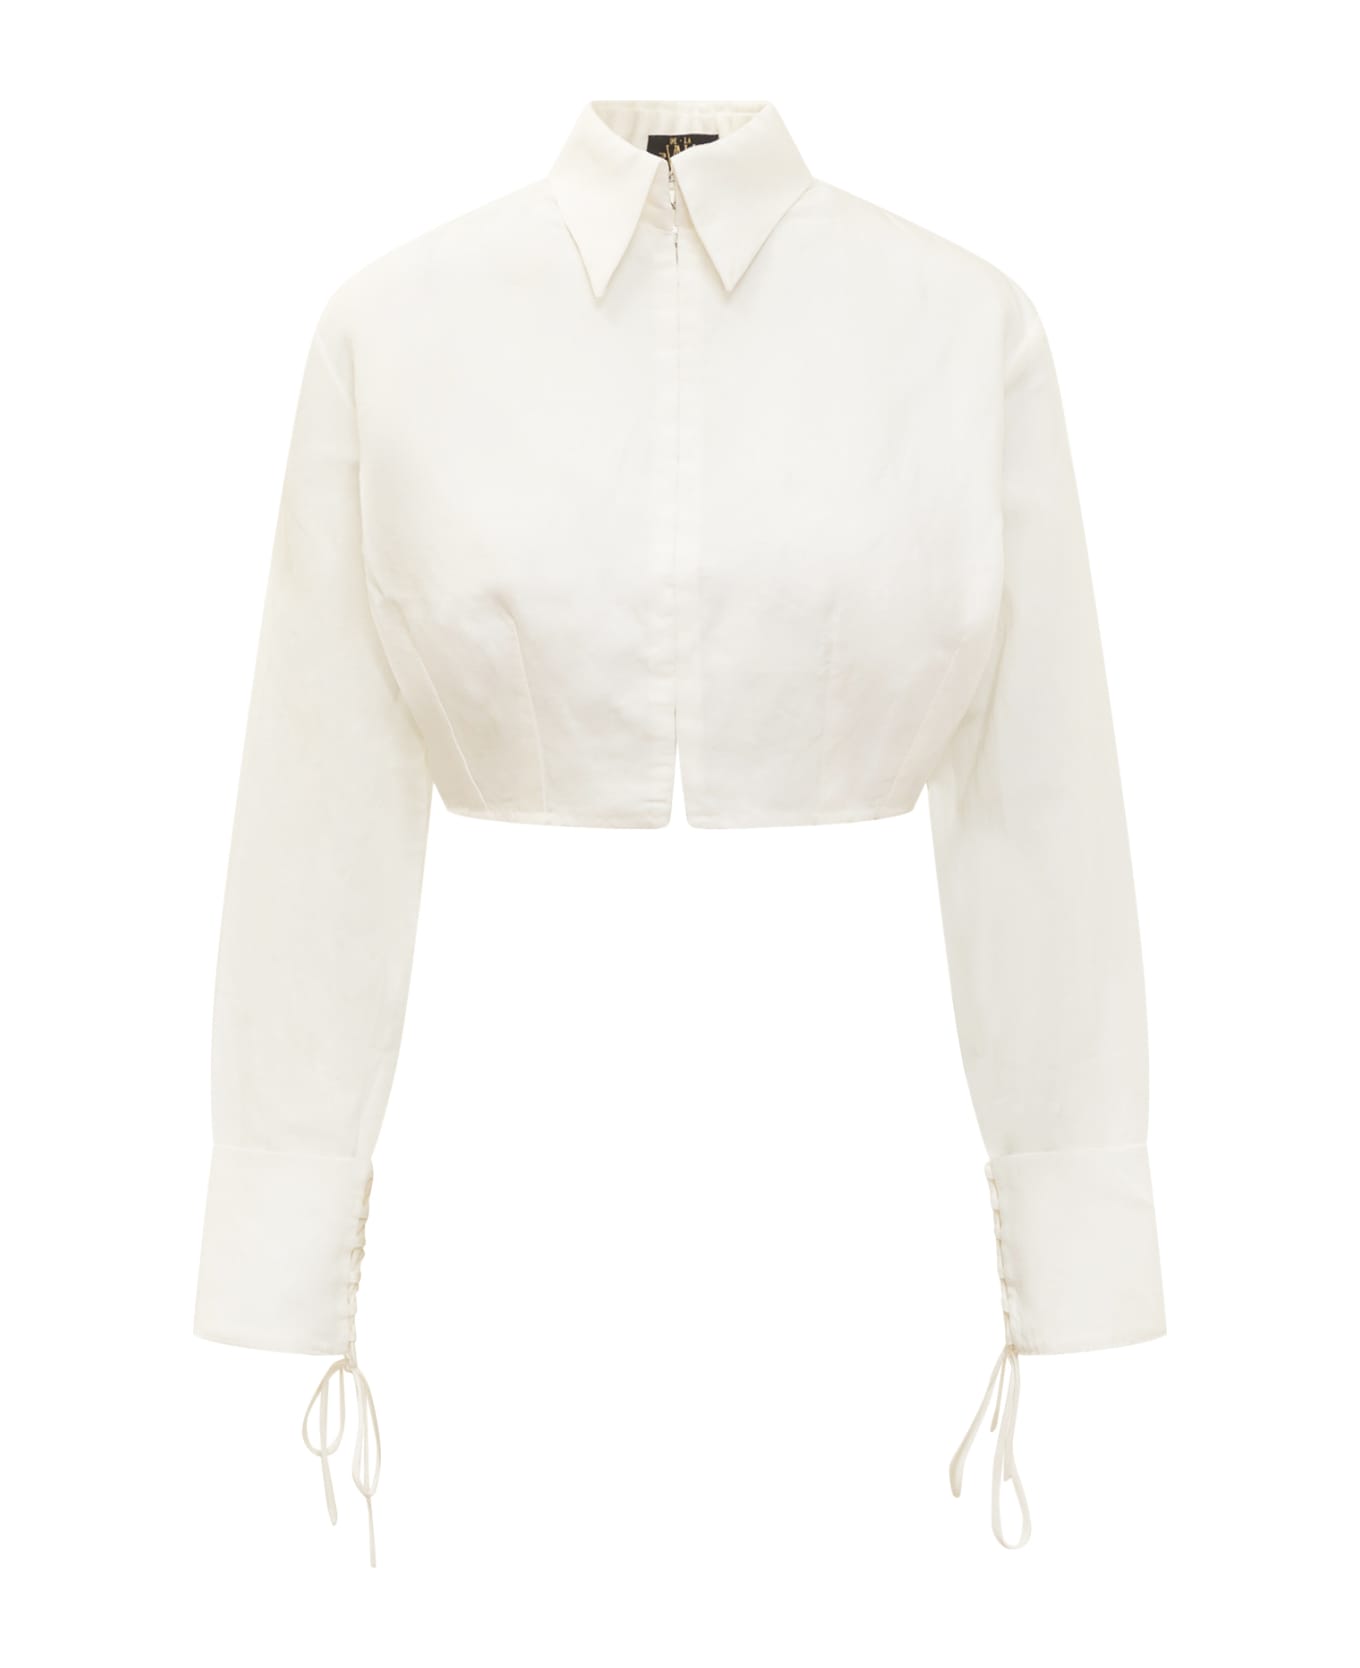 De La Vali Crop Shirt - WHITE シャツ